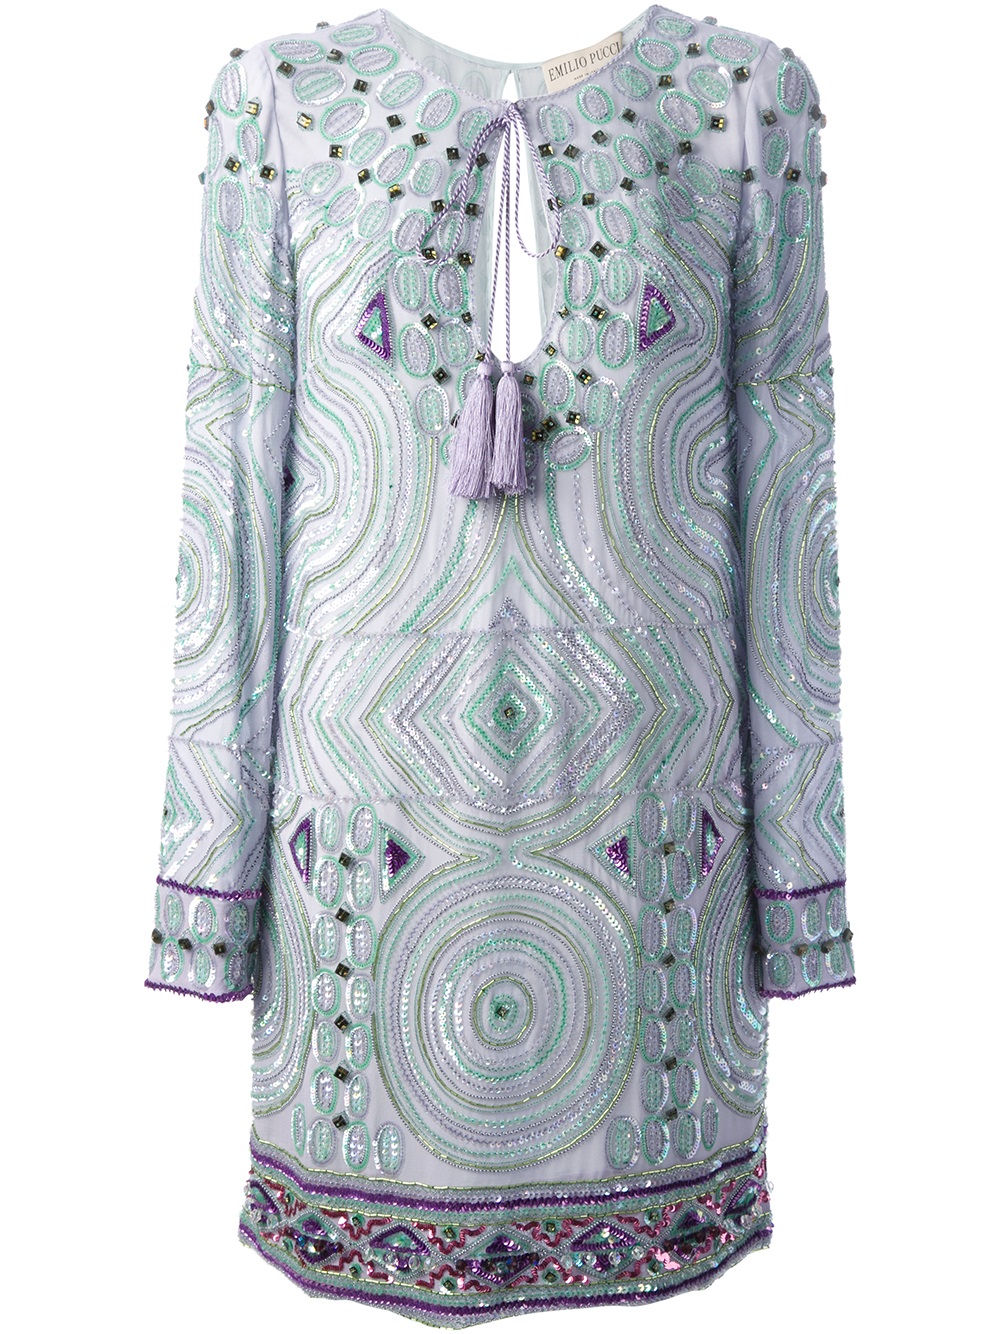 Emilio pucci Bead Embellished Tunic Dress in Purple | Lyst